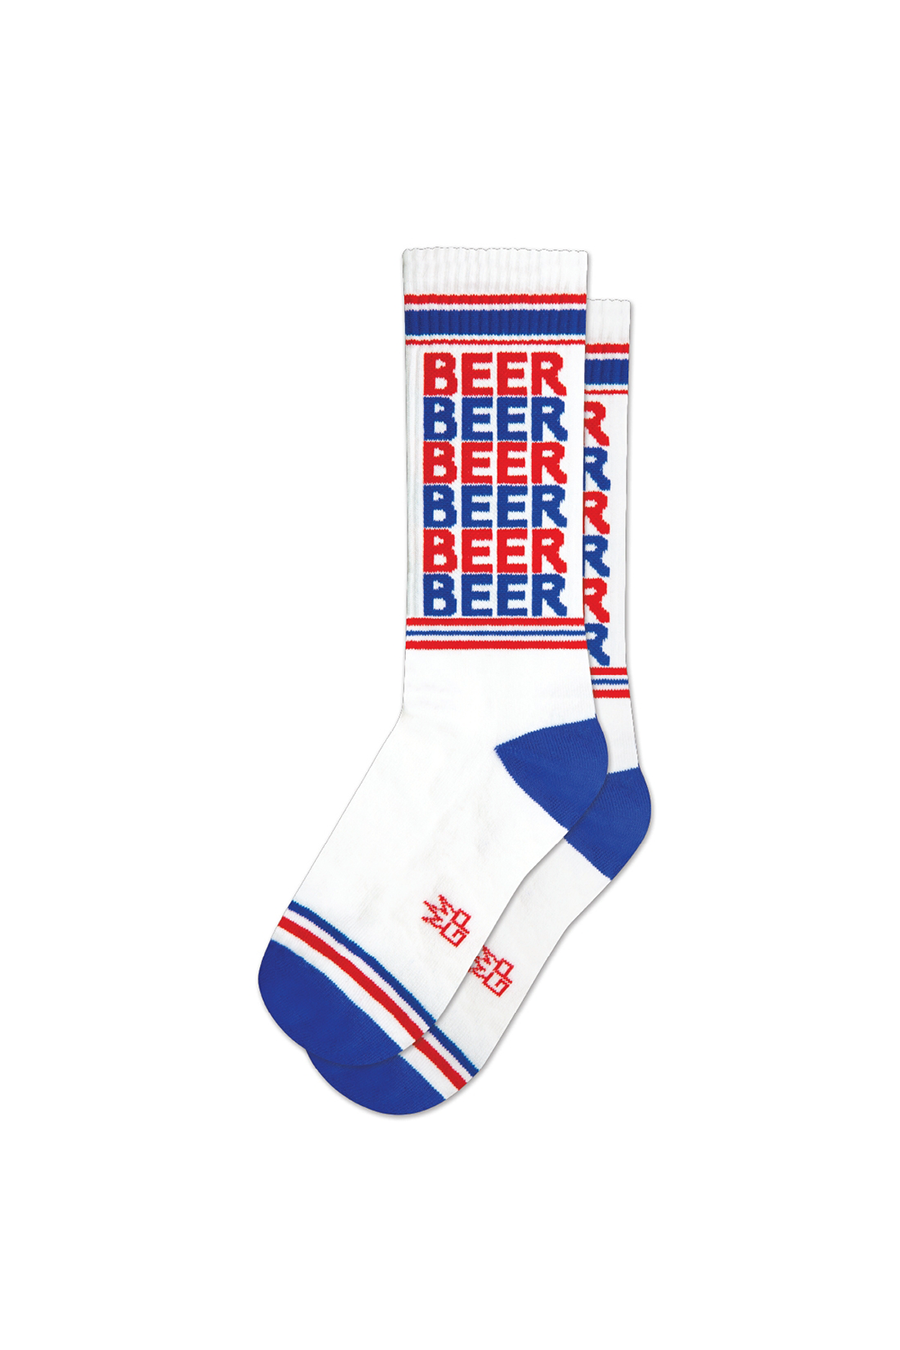 Beer Patriotic Repeat Gym Sock - Main Image Number 1 of 1